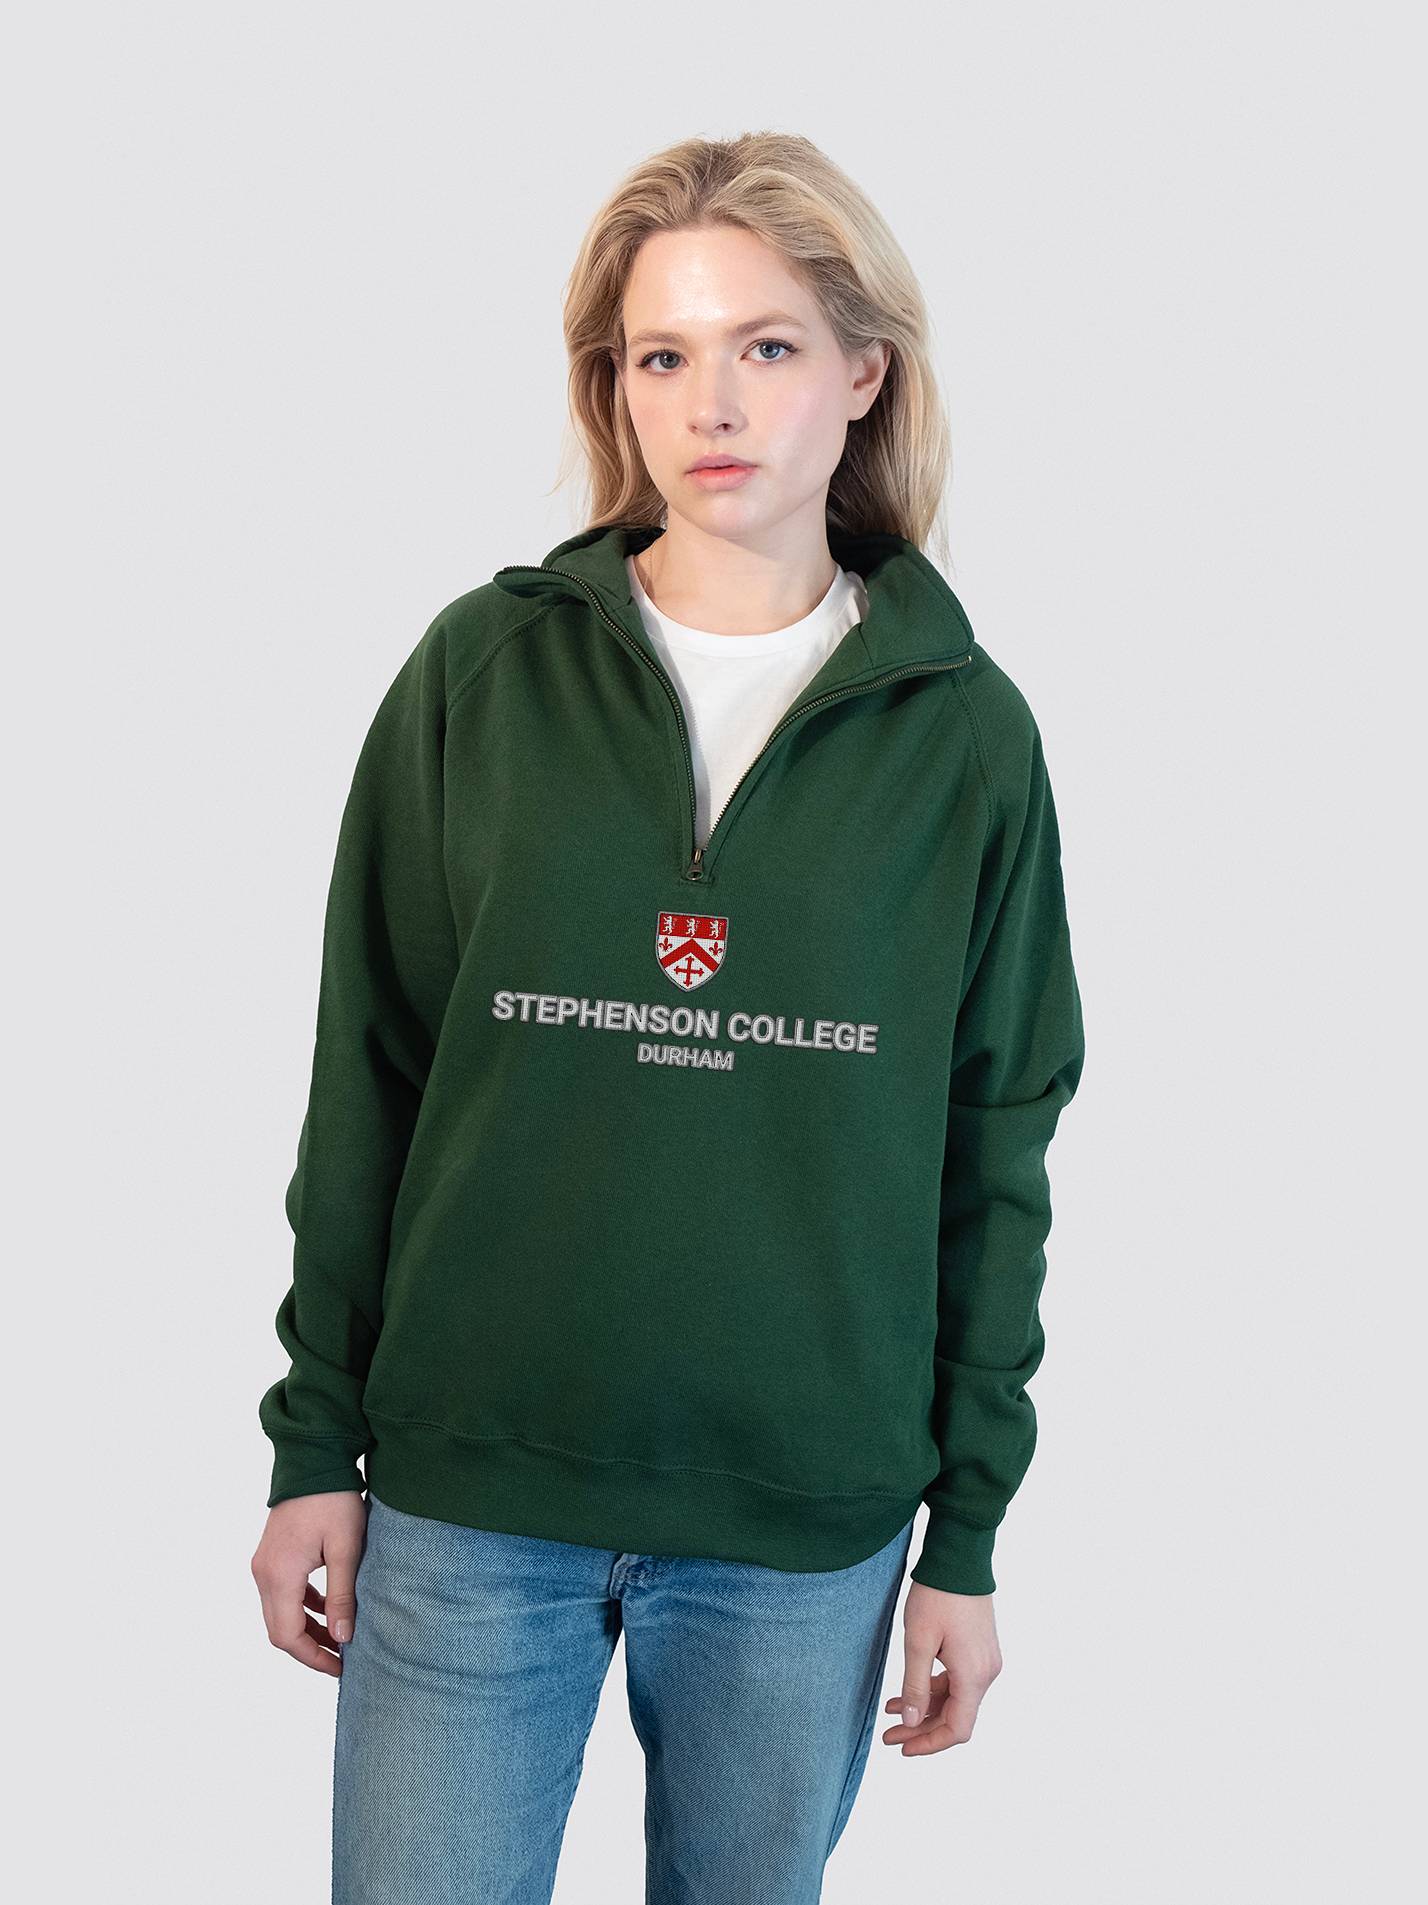 Stephenson College Durham Heritage Unisex 1/4 Zip Sweatshirt